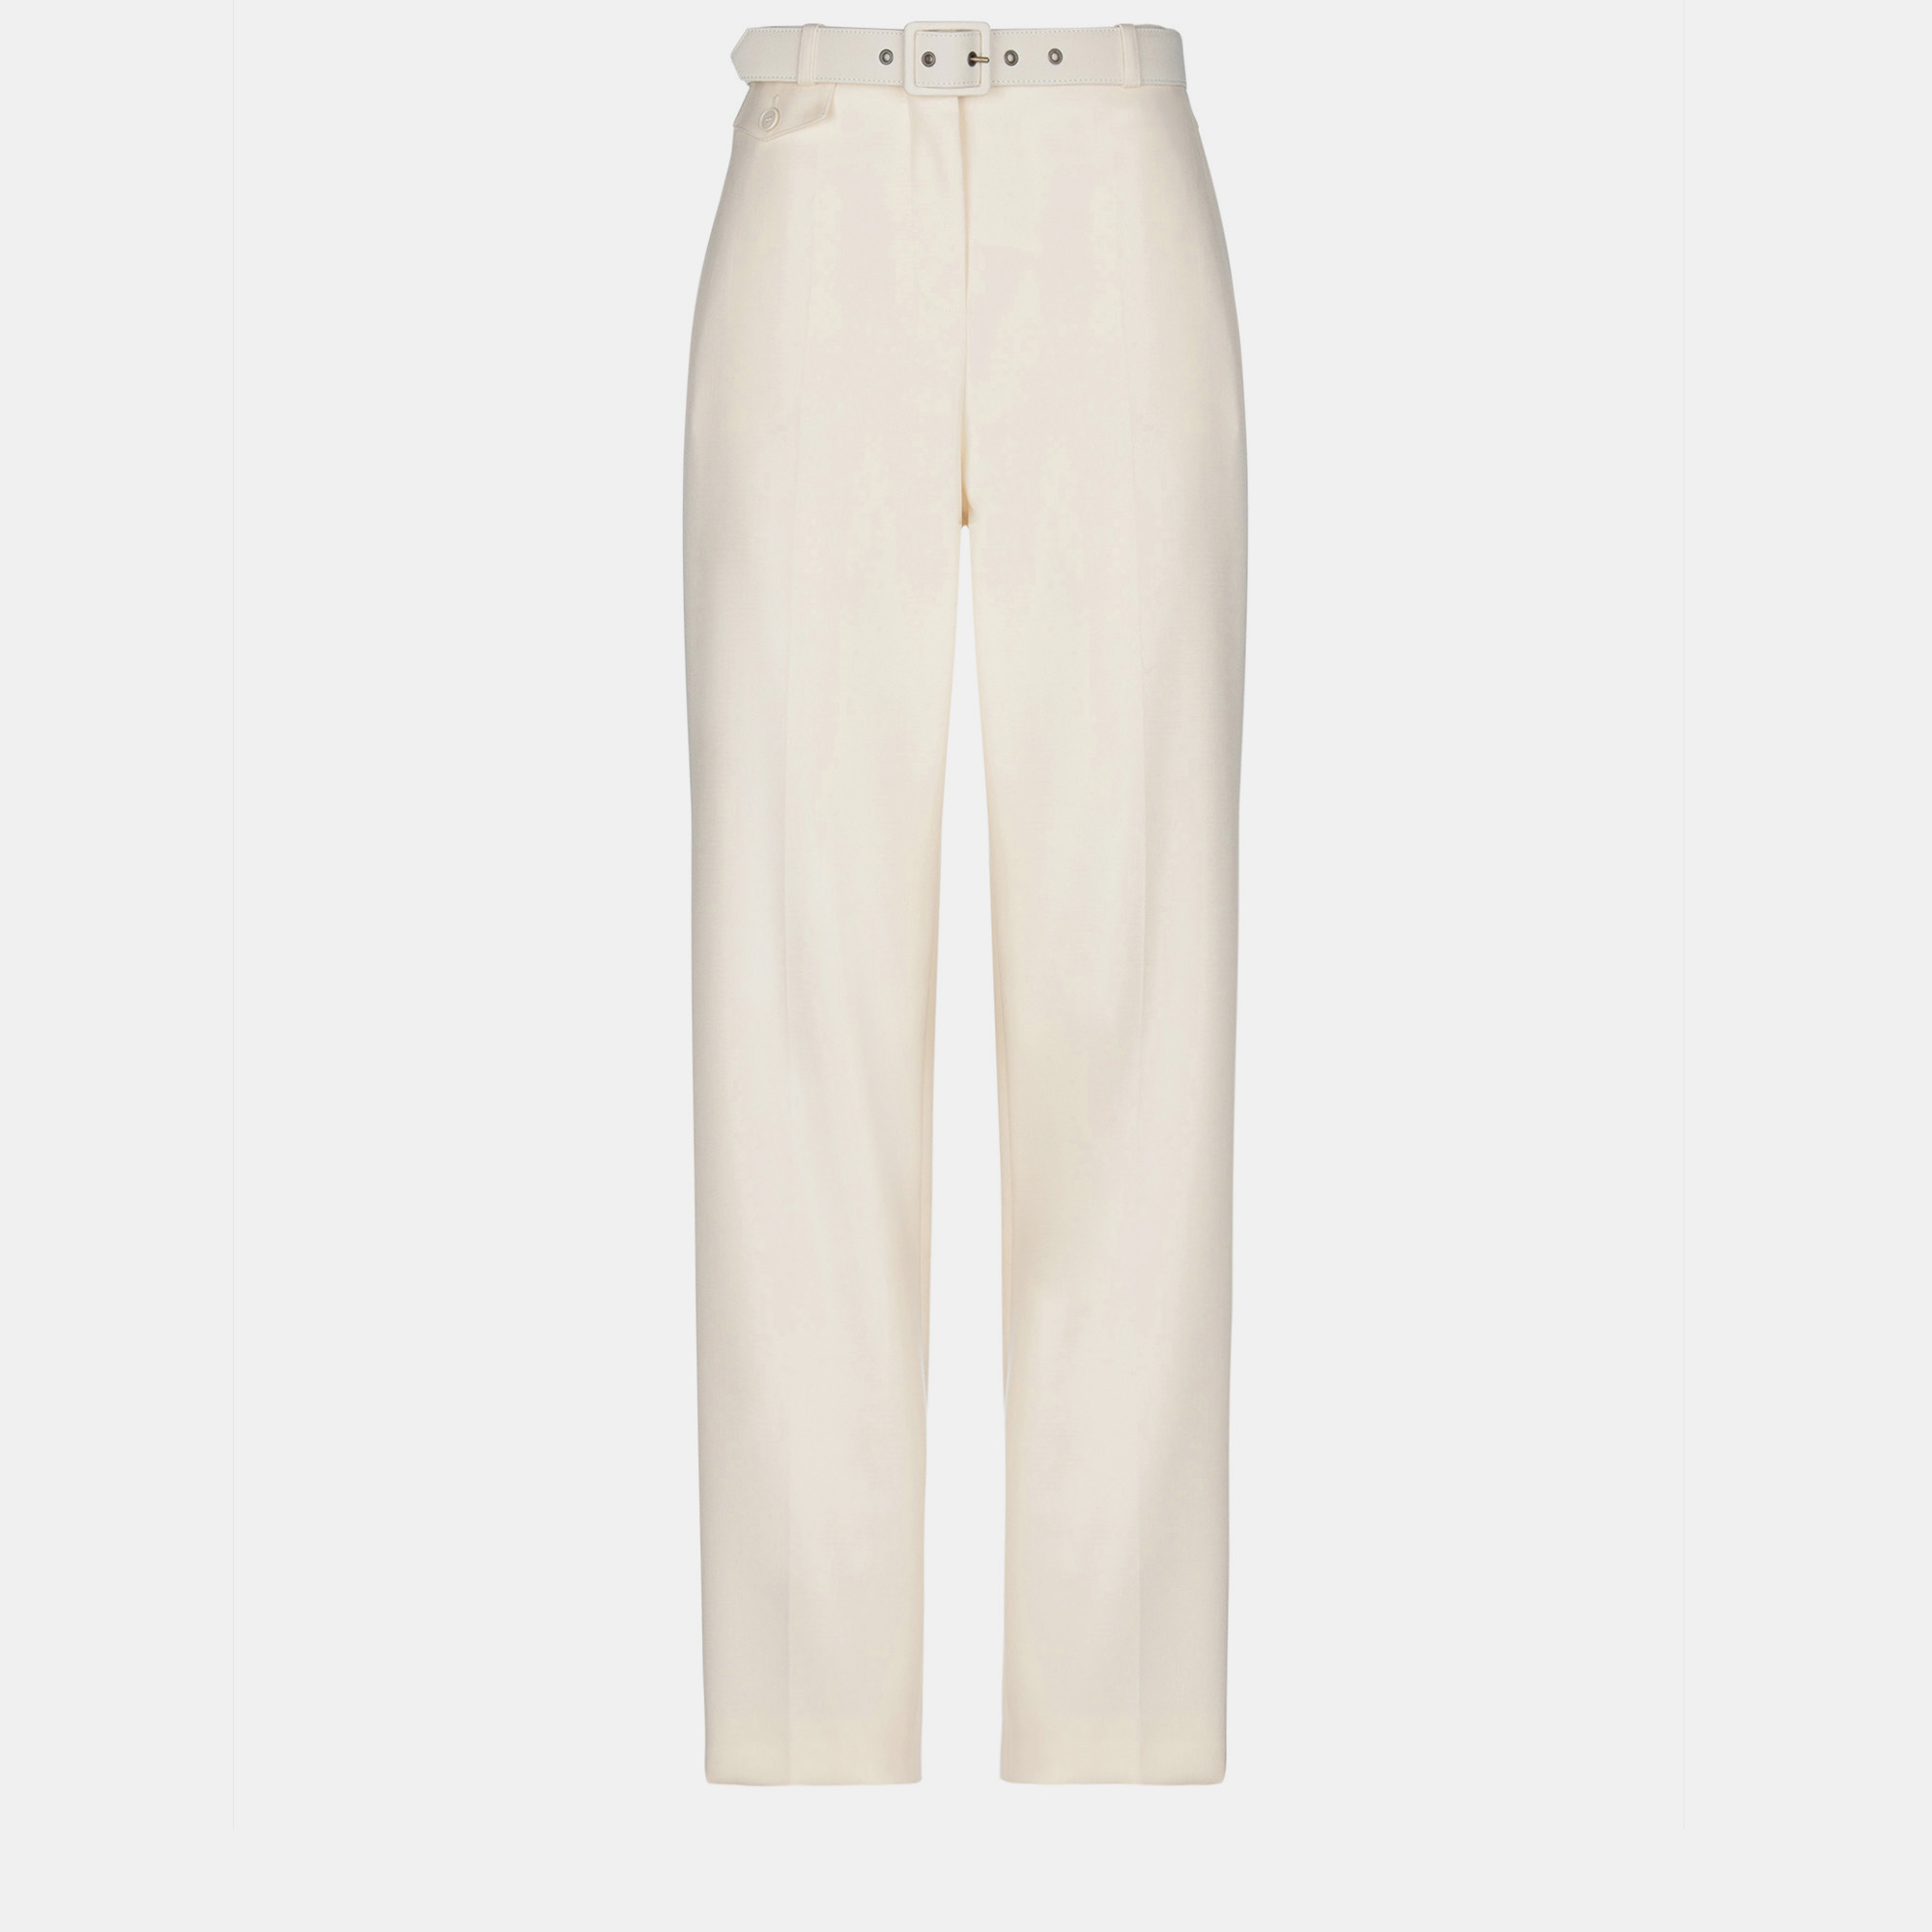 Givenchy polyester pants 38